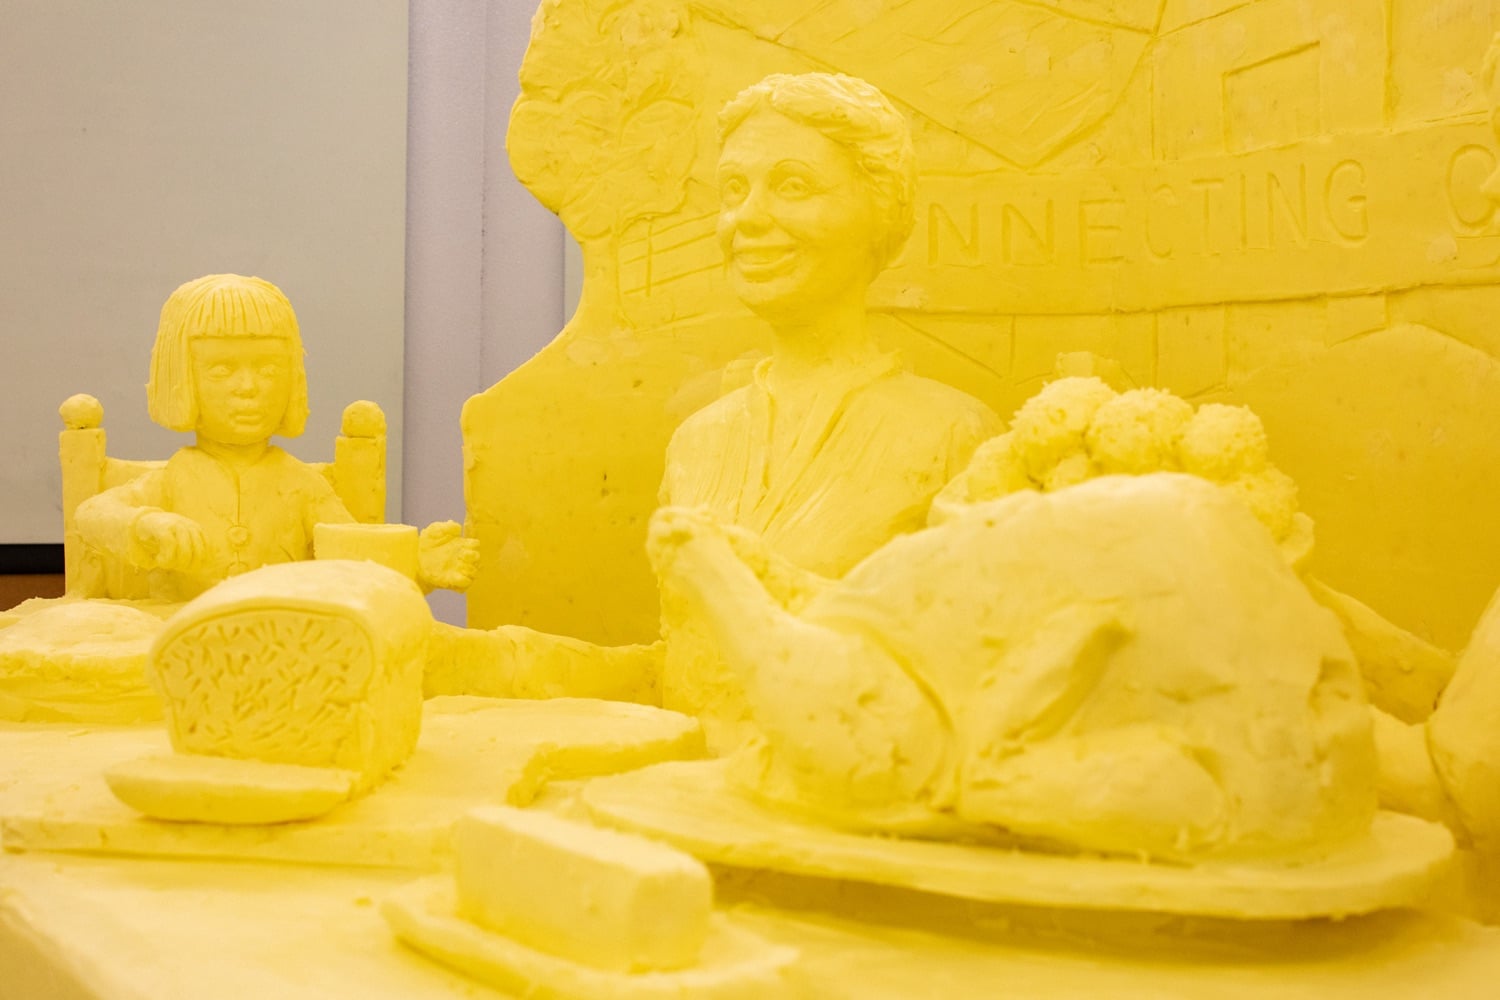 Half-ton butter sculpture key feature of 2023 PA Farm Show